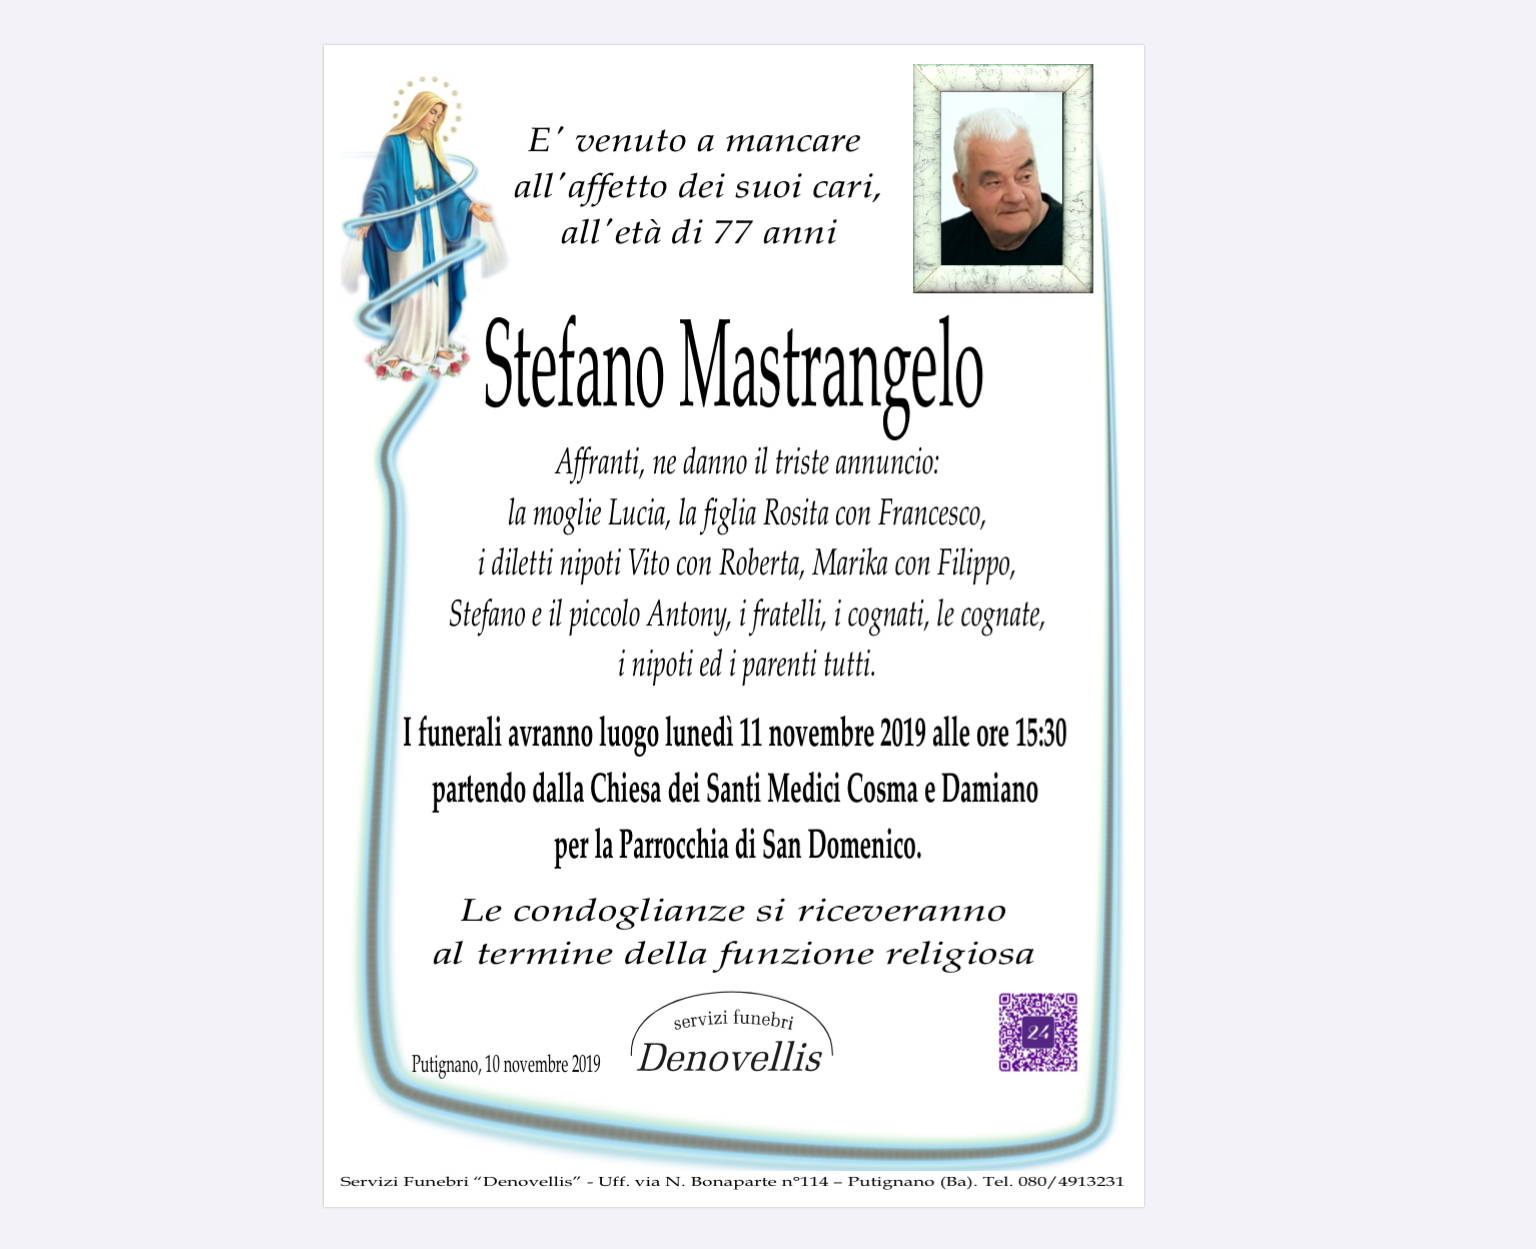 Stefano Mastrangelo